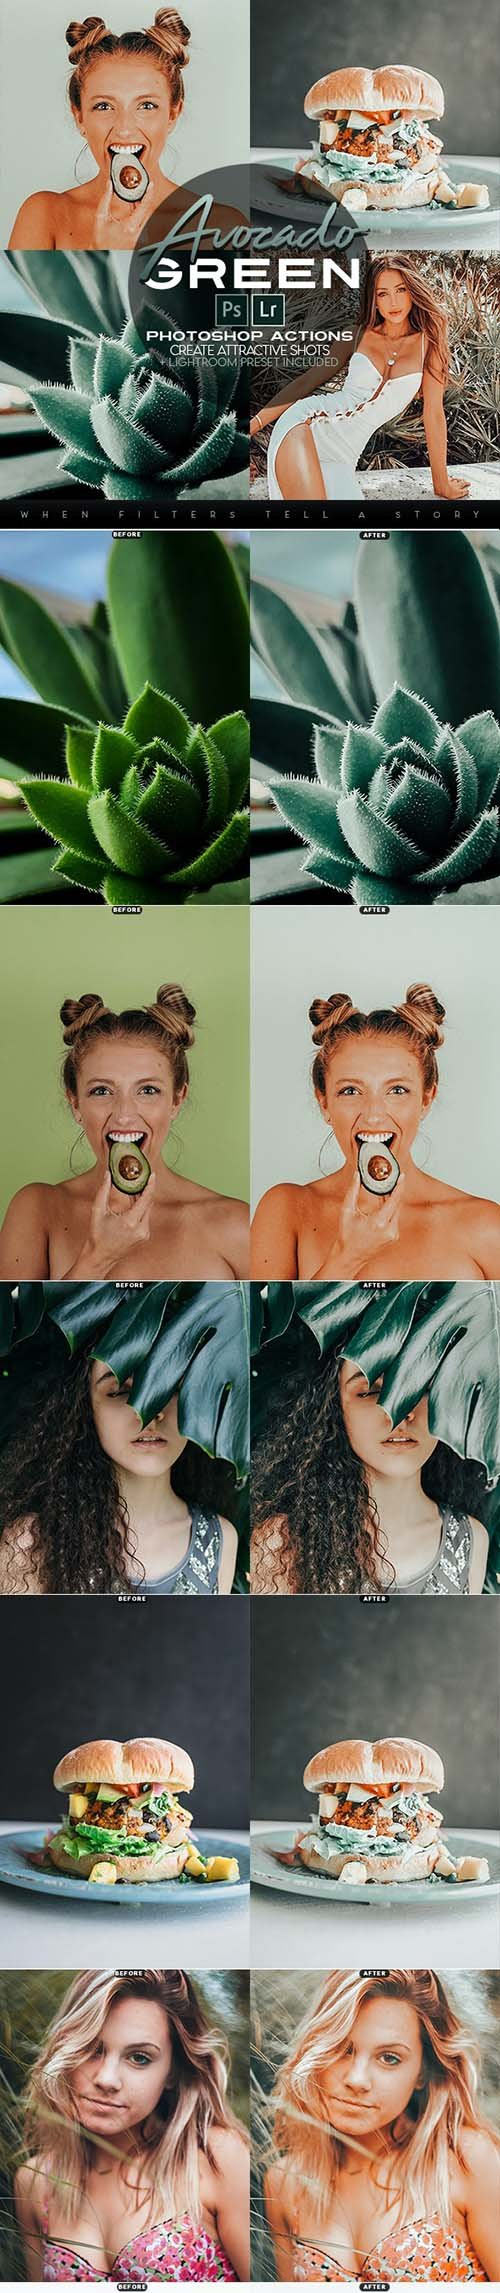 Avocado Green Photoshop Actions + LR Presets